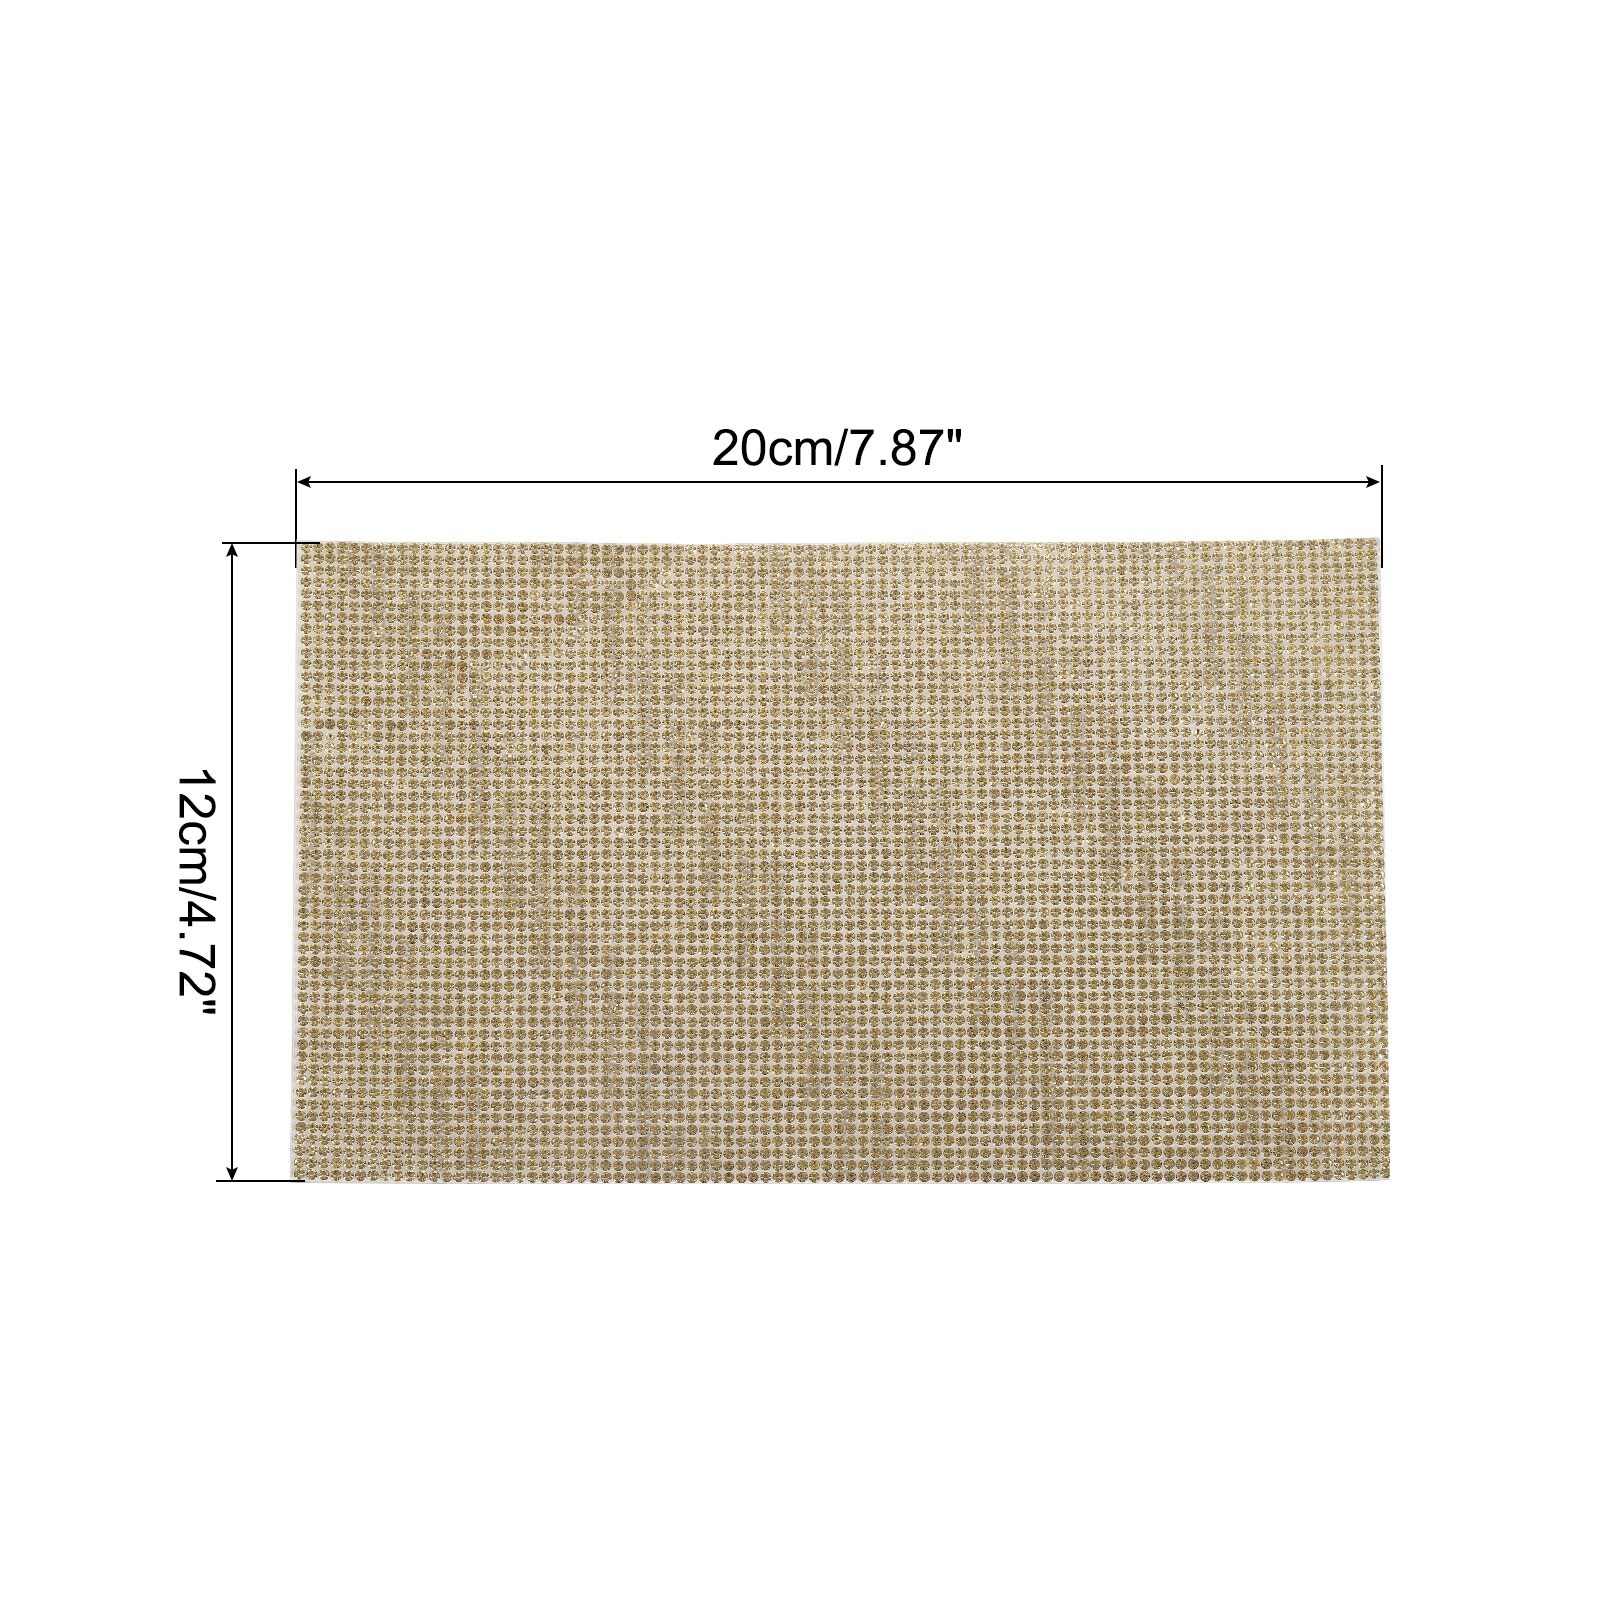 Bling Rhinestone Sheet Self-Adhesive Sticker 4.72 x 7.87 Inch - On Sale -  Bed Bath & Beyond - 38456680